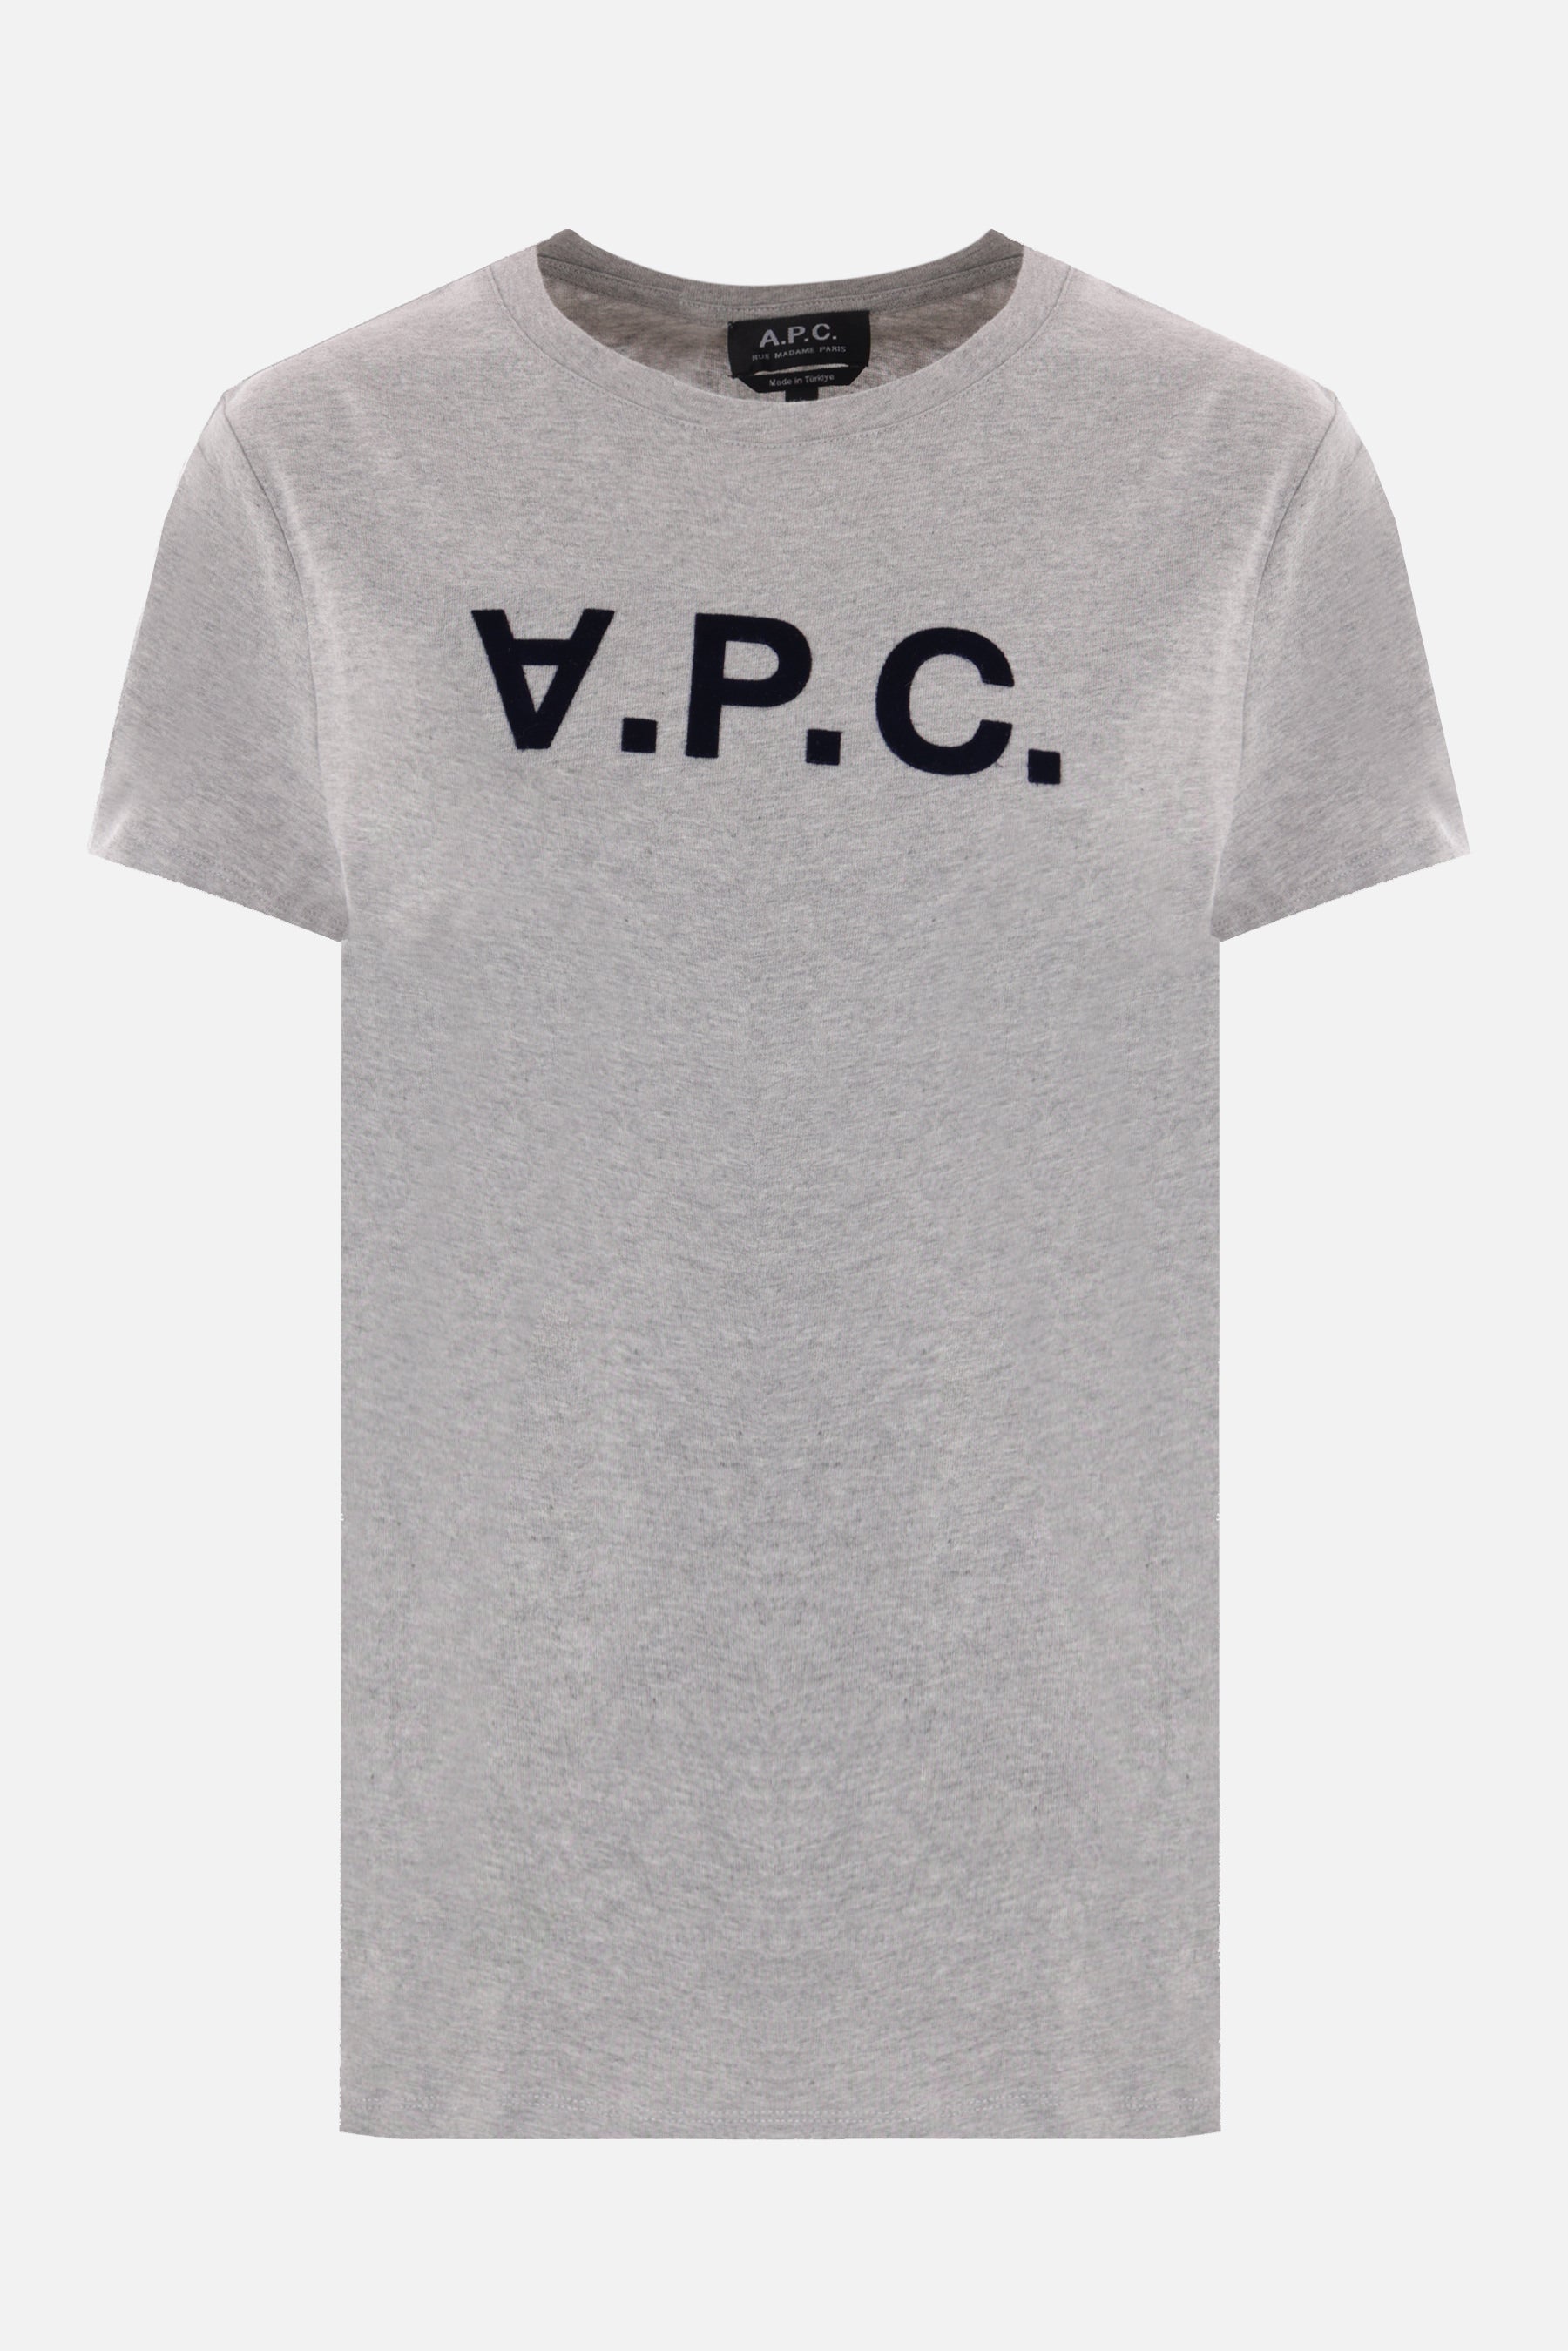 V.P.C. cotton t-shirt